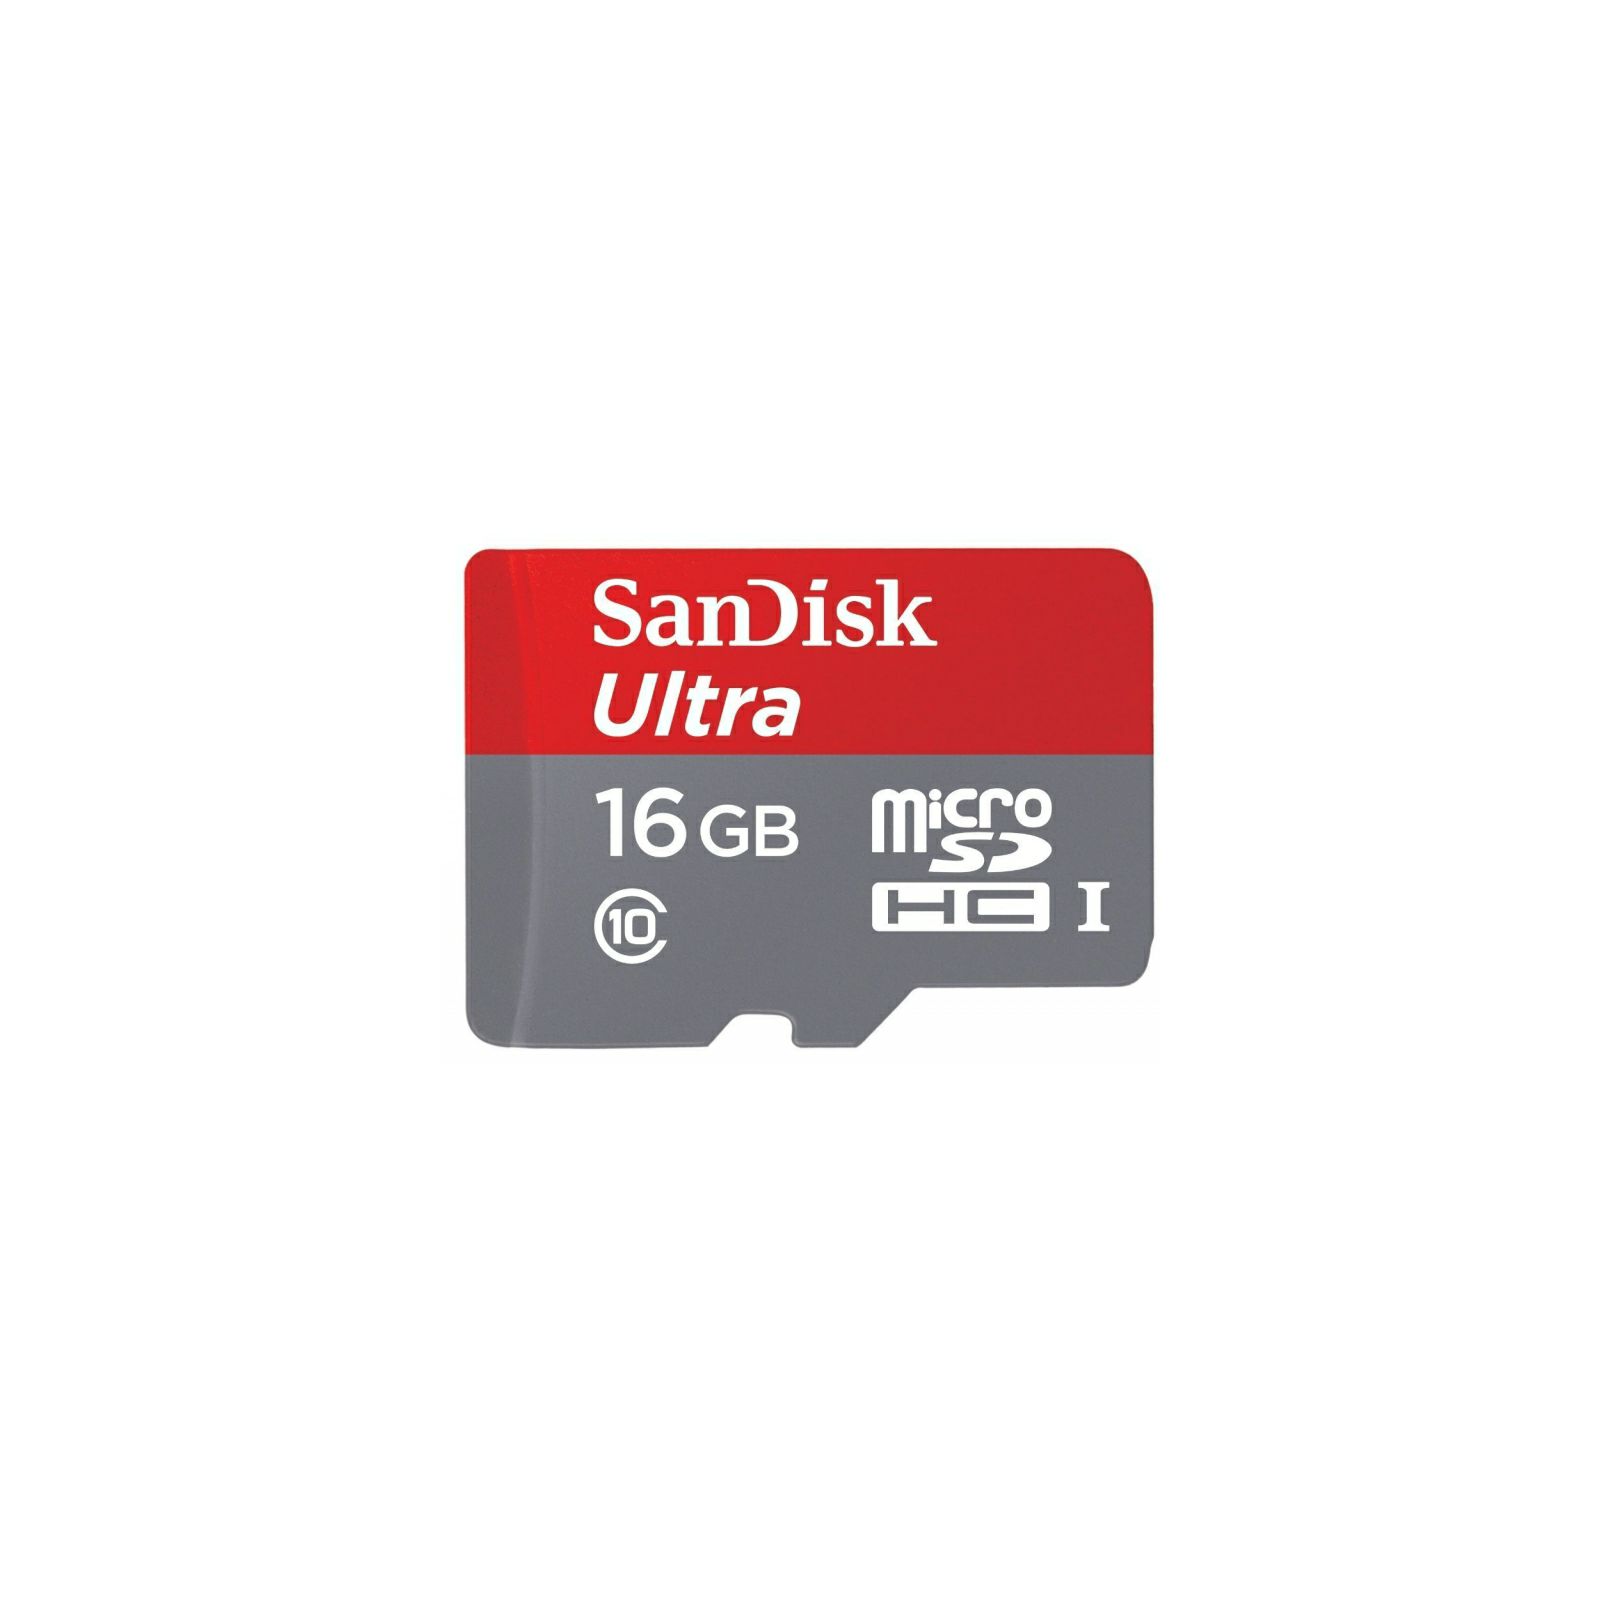 SanDisk Ultra Android microSDHC 16GB 80 MB/s Class 10 Speed Retail Ready Display SDSQUNC-016G-GN6M5 Memorijska kartica